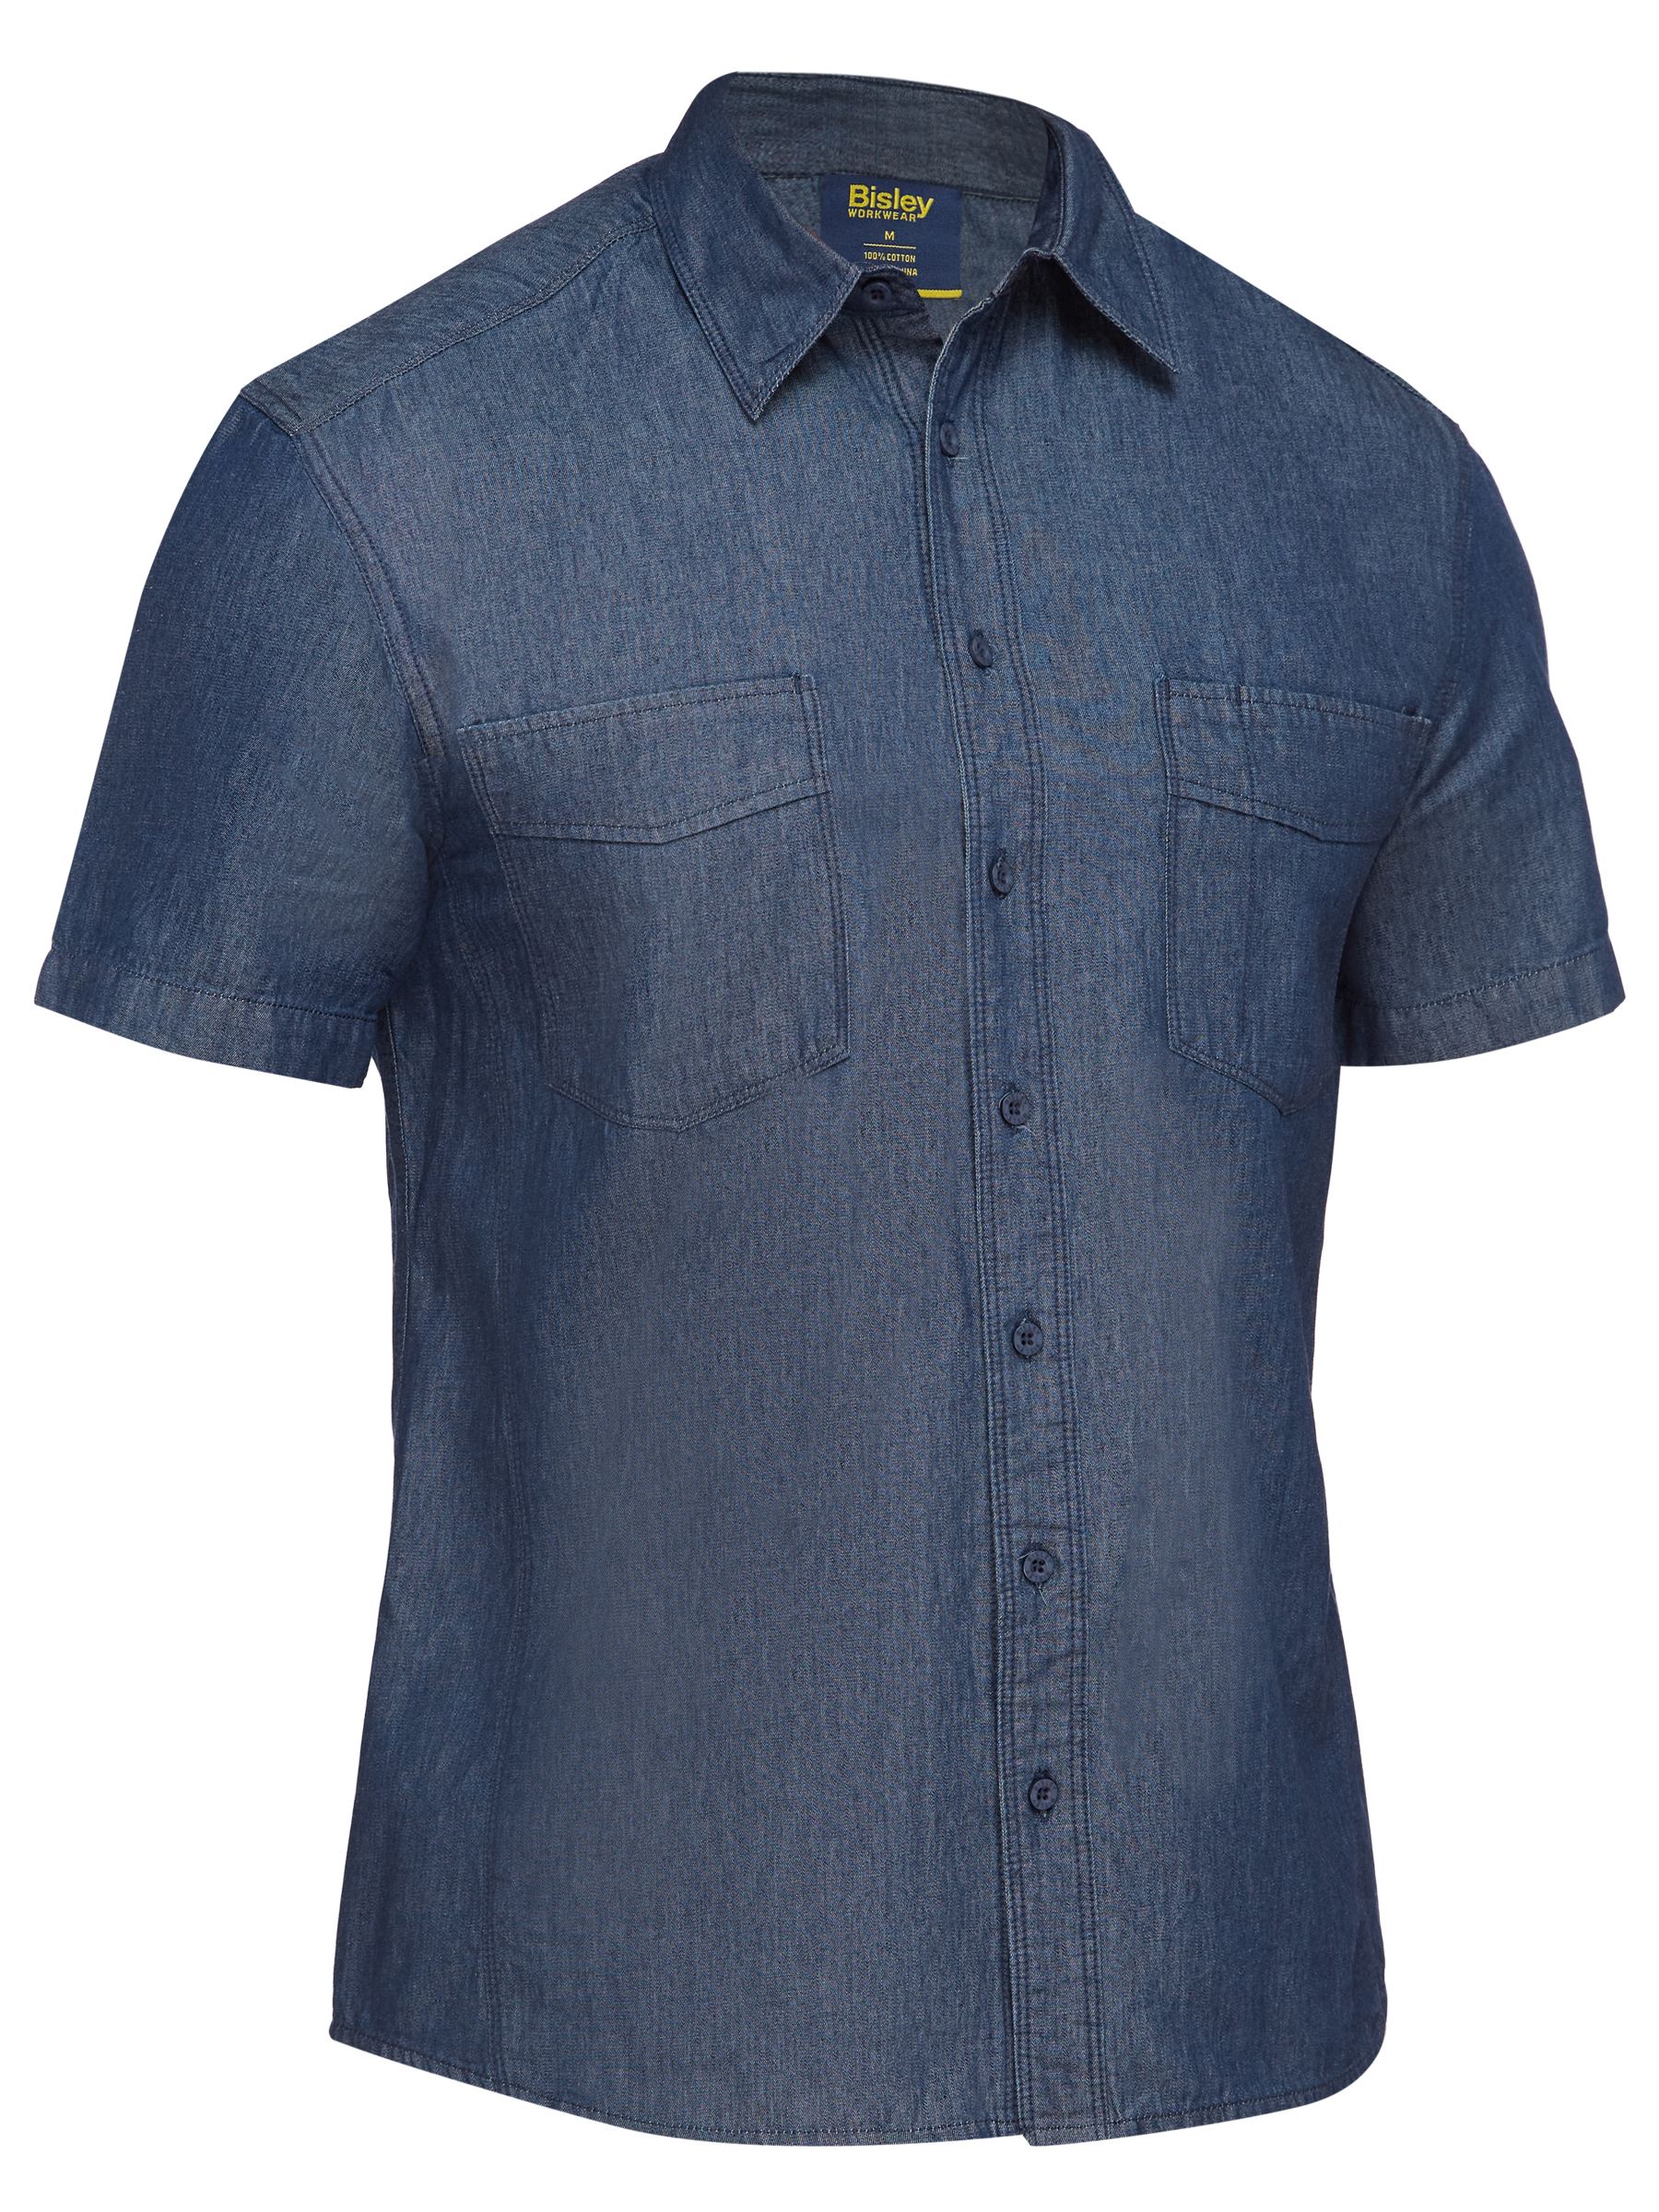 Mens short sleeve denim work shirt - BS1602 - Bisley Workwear